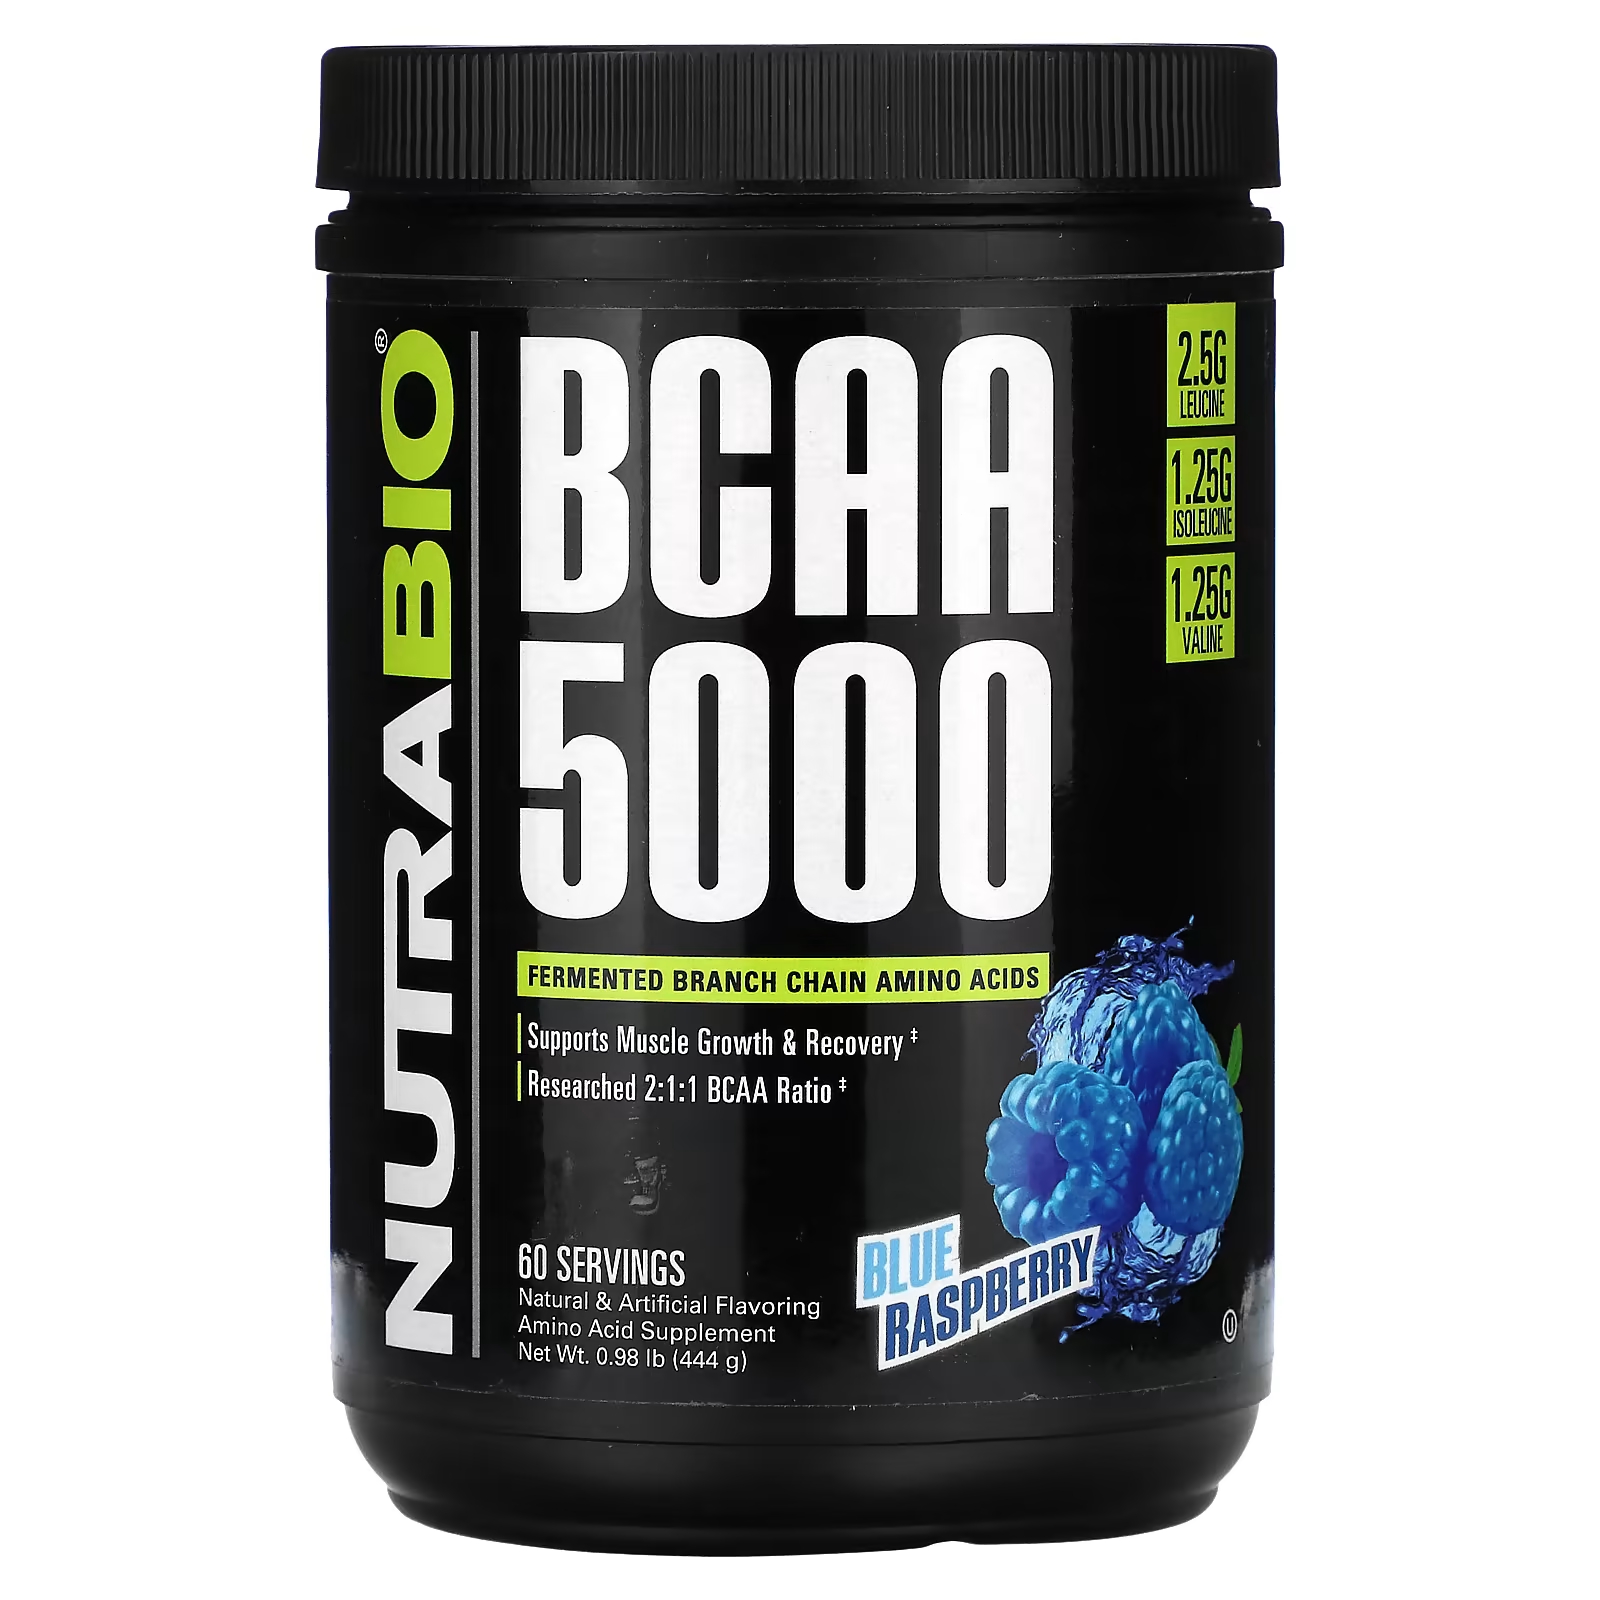 Пищевая добавка Nutrabio Labs BCAA 5000, голубая малина пищевая добавка perfect sports bcaa hyper clear голубая малина